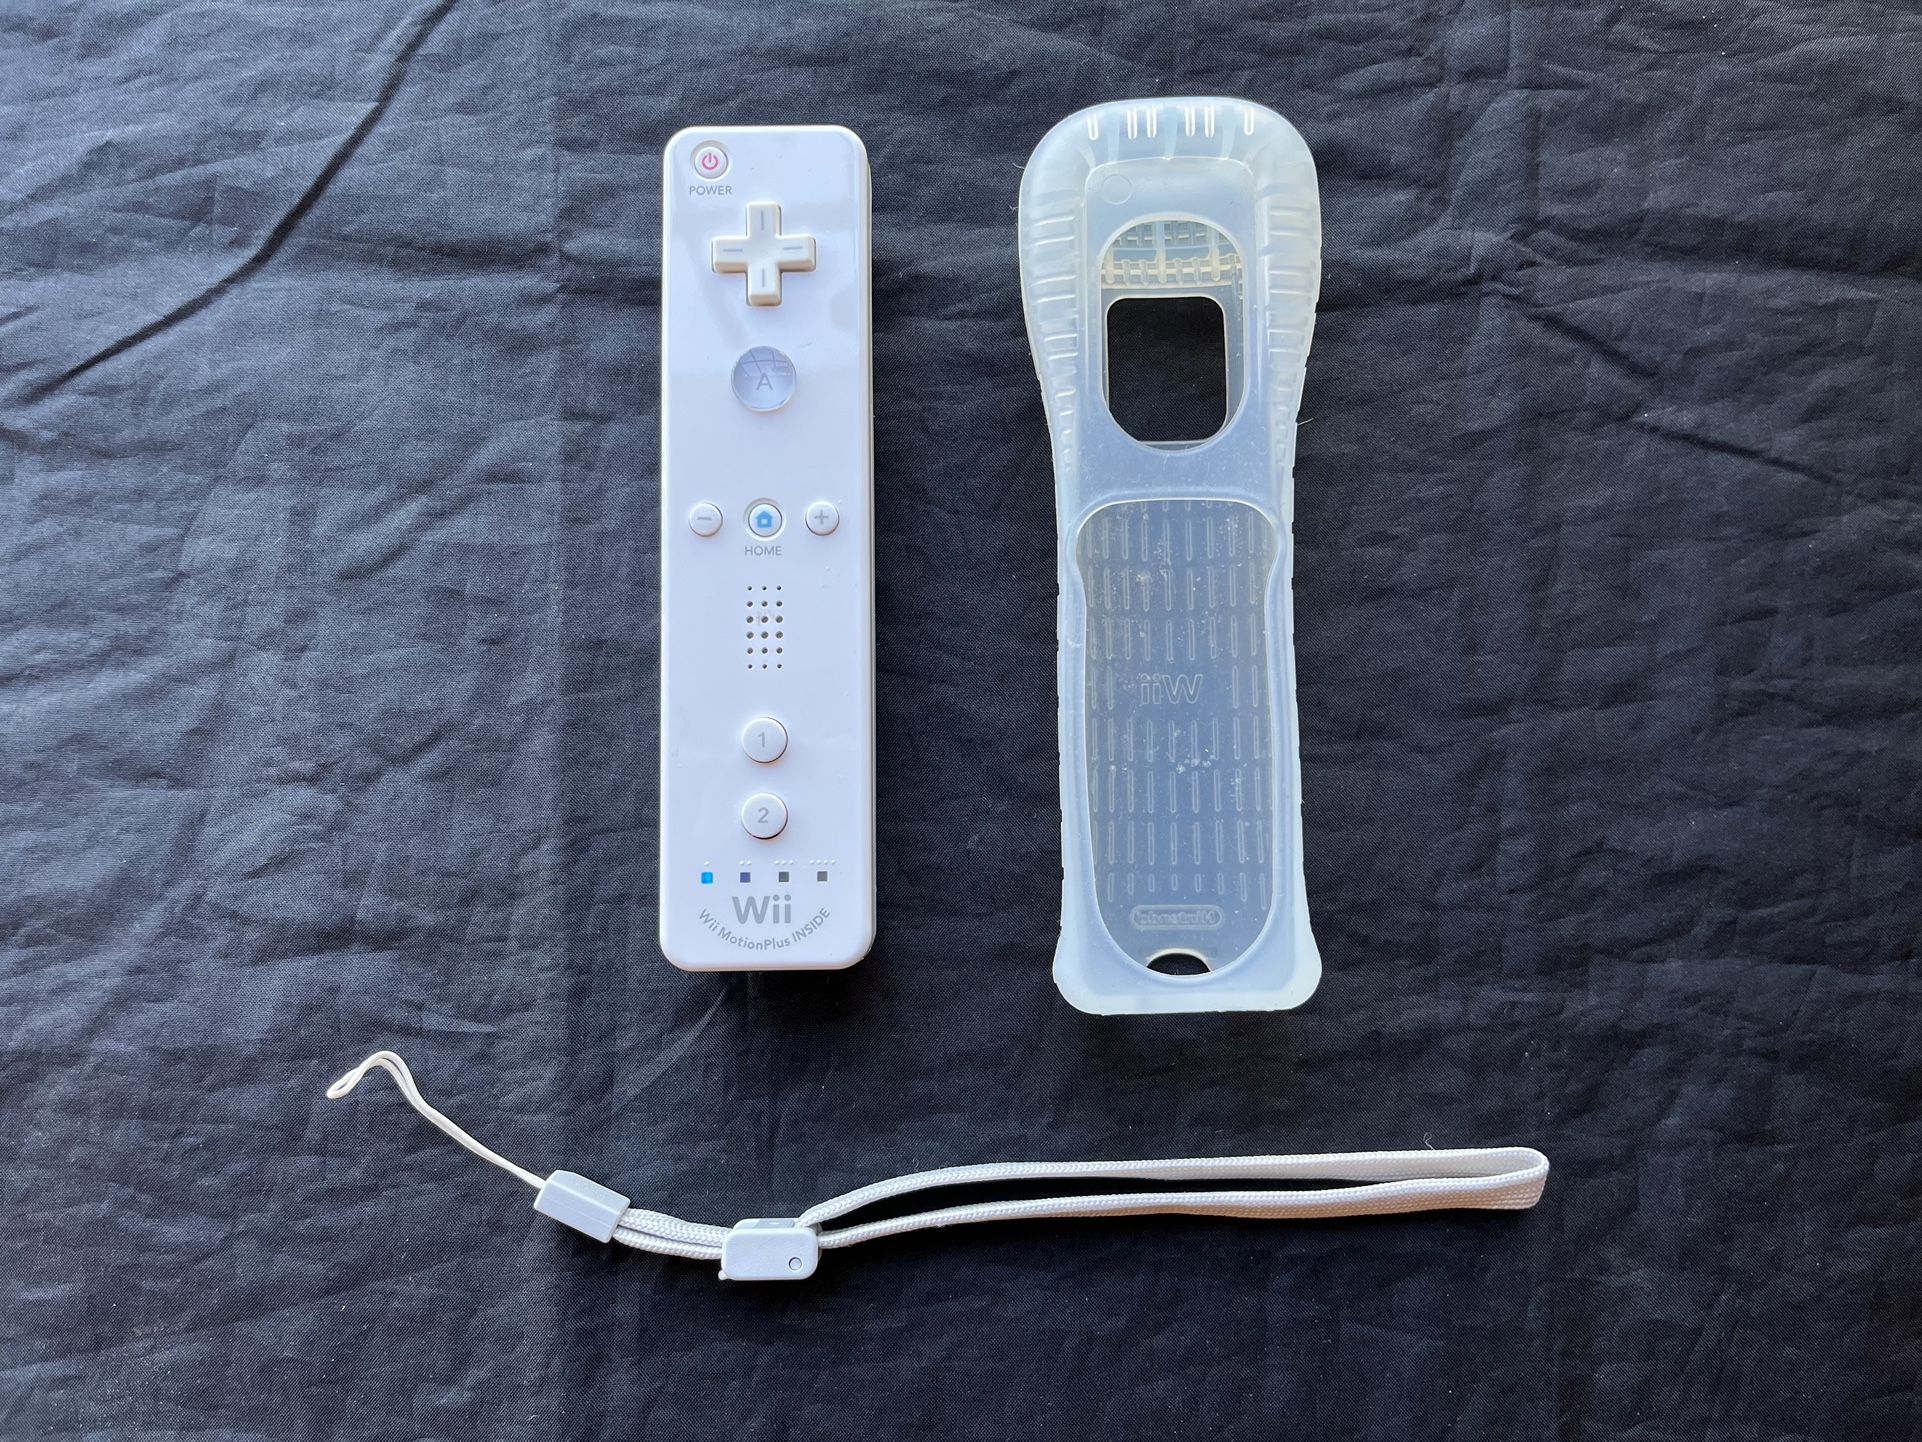 Nintendo Brand White Wii Remote w/ Motion Plus - PRICE FIRM